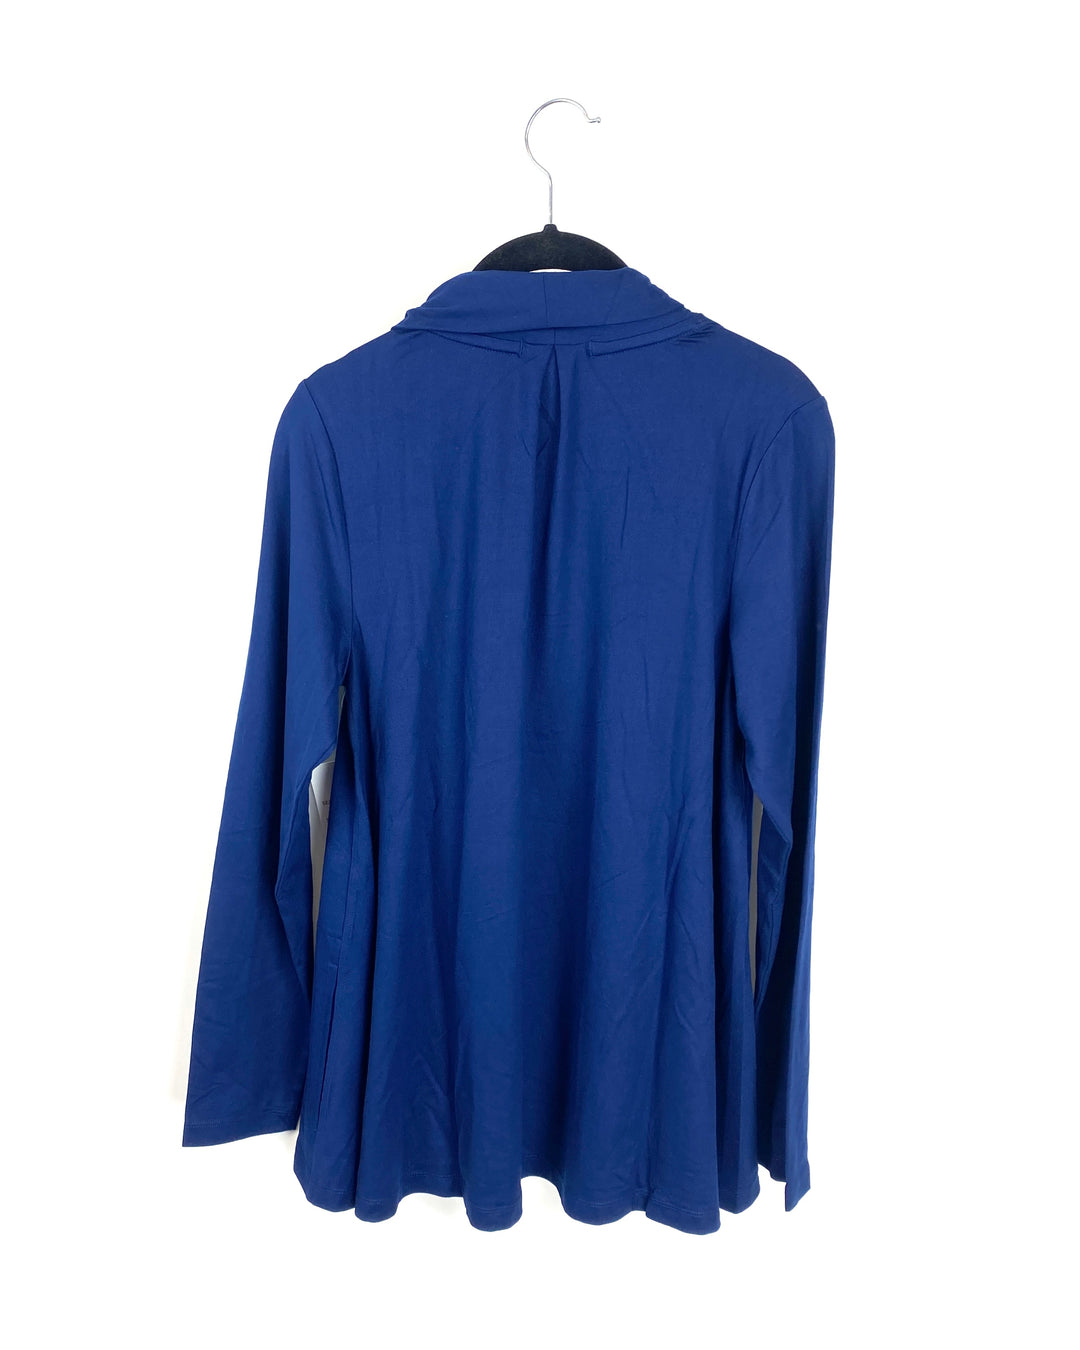 Navy Blue Long Sleeve Cardigan - Size 6-8